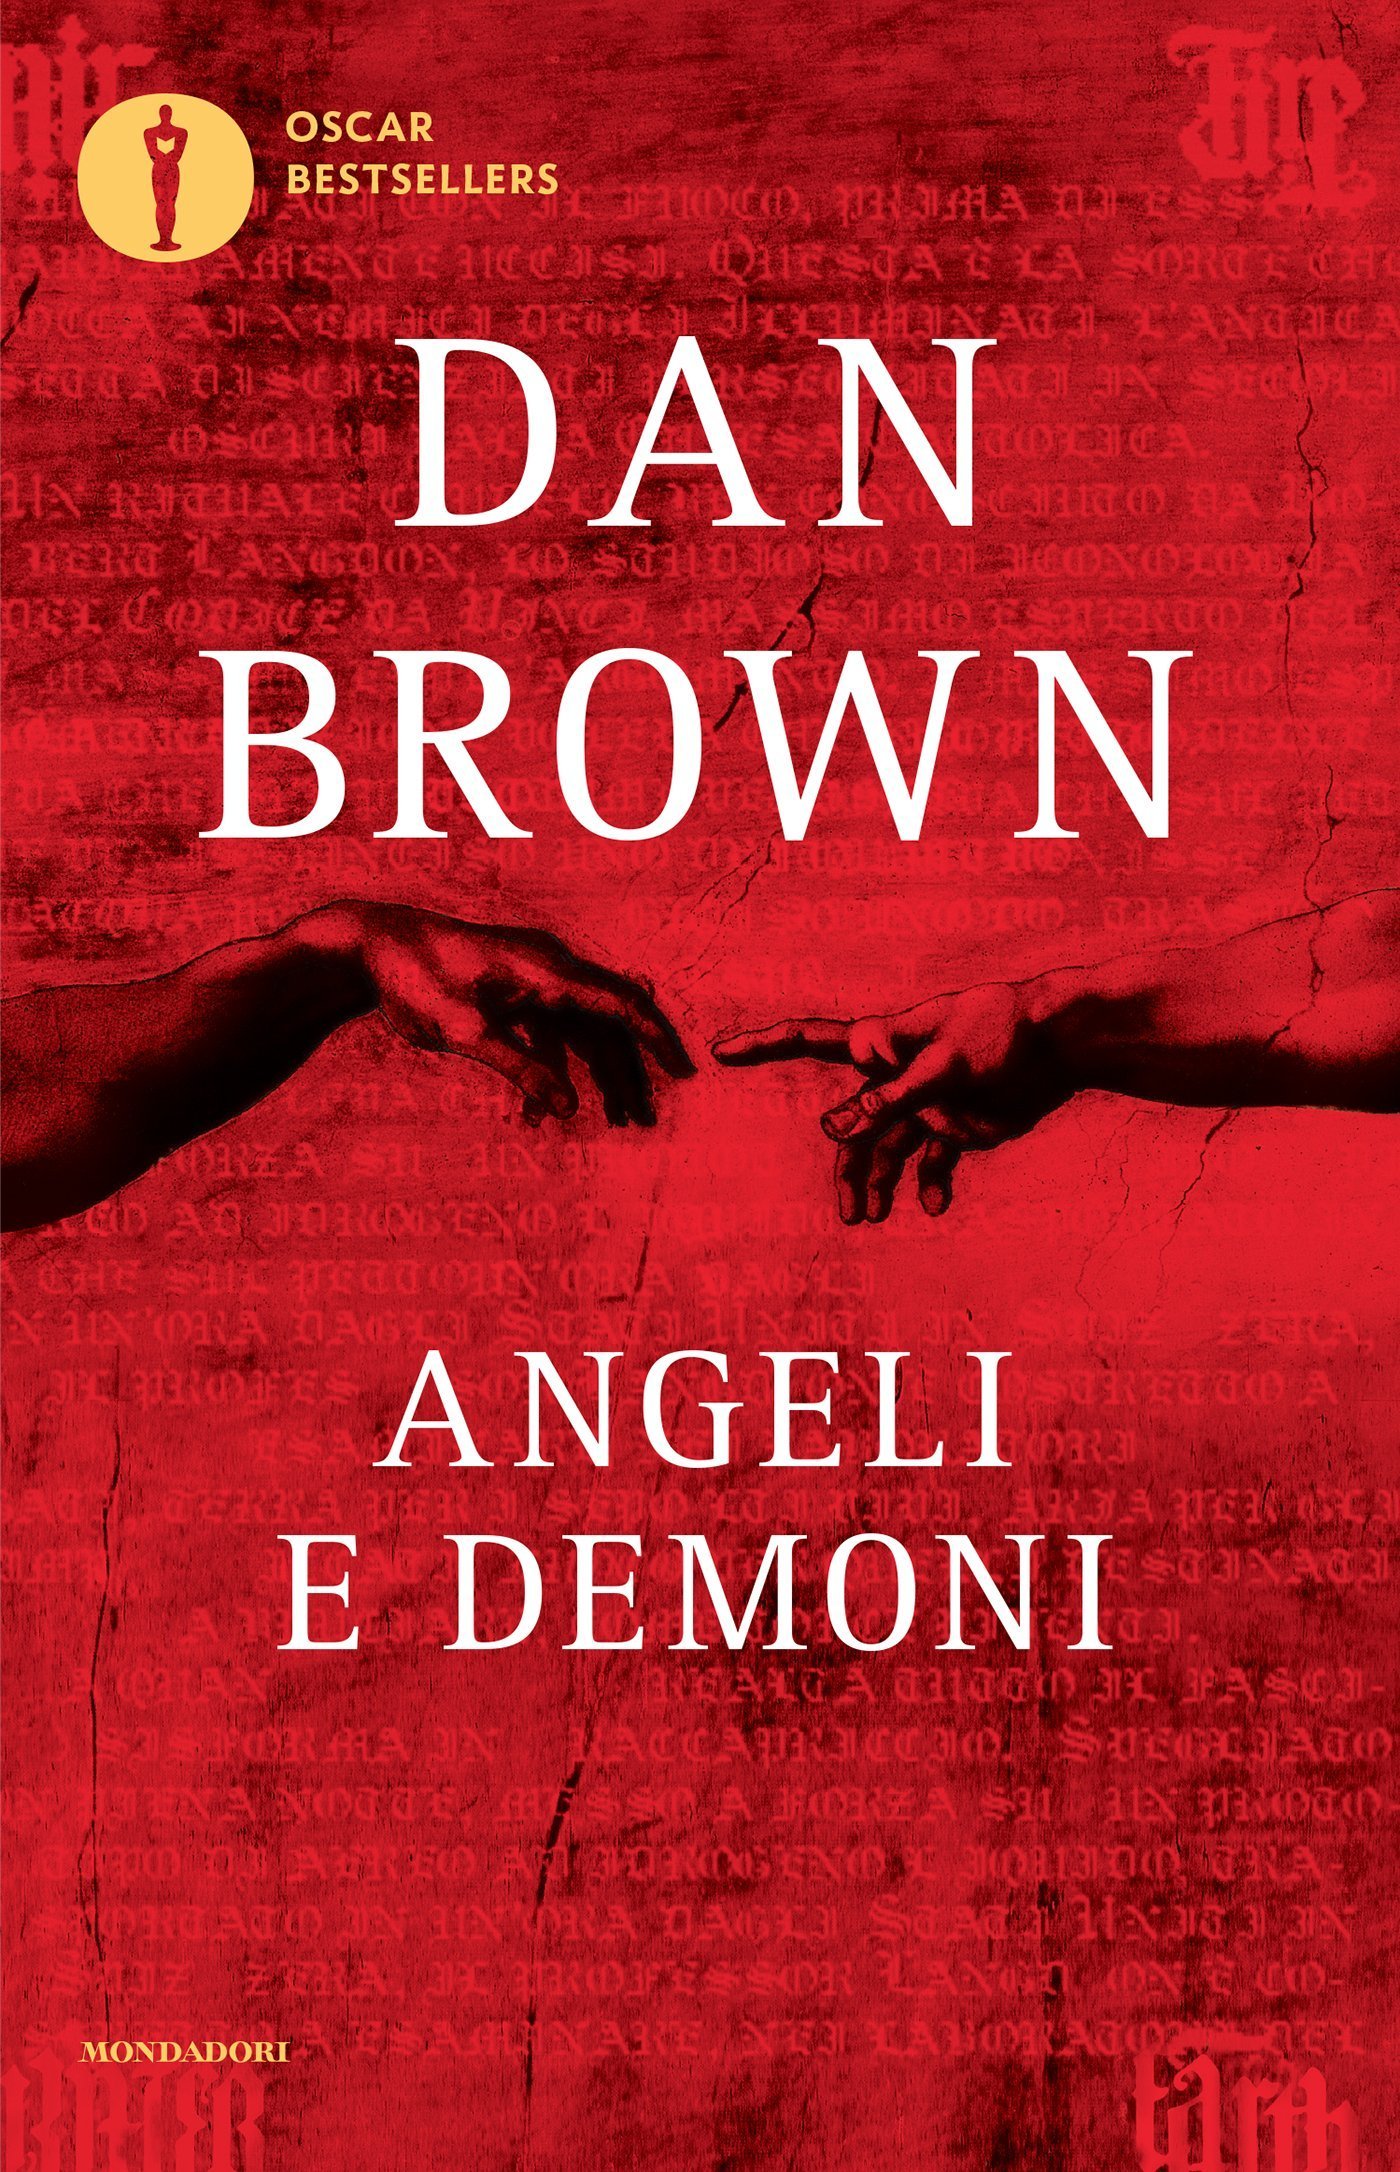 "ANGELI E DEMONI" di Dan Brown